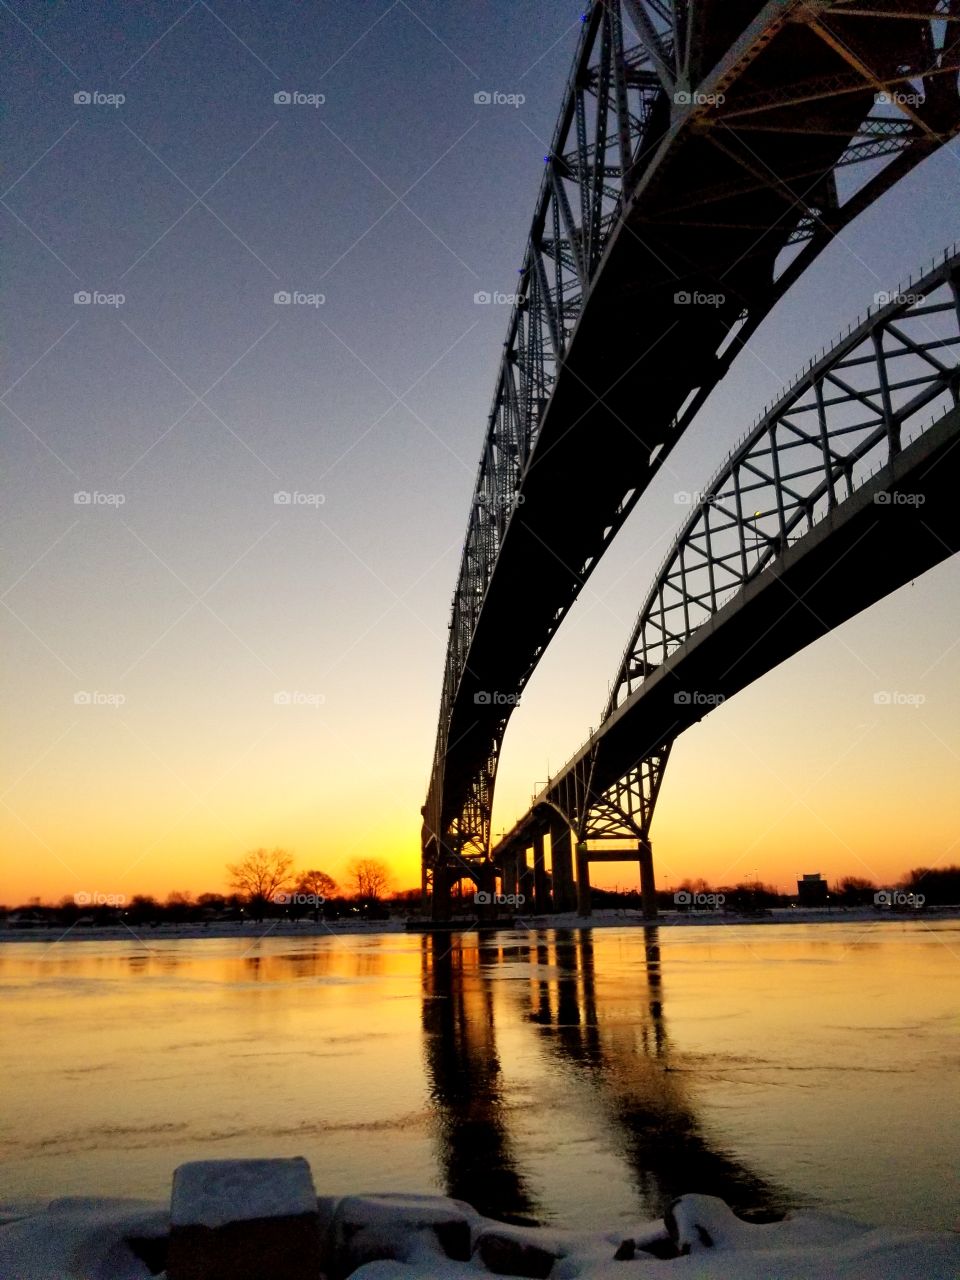 Bridges over a calm river